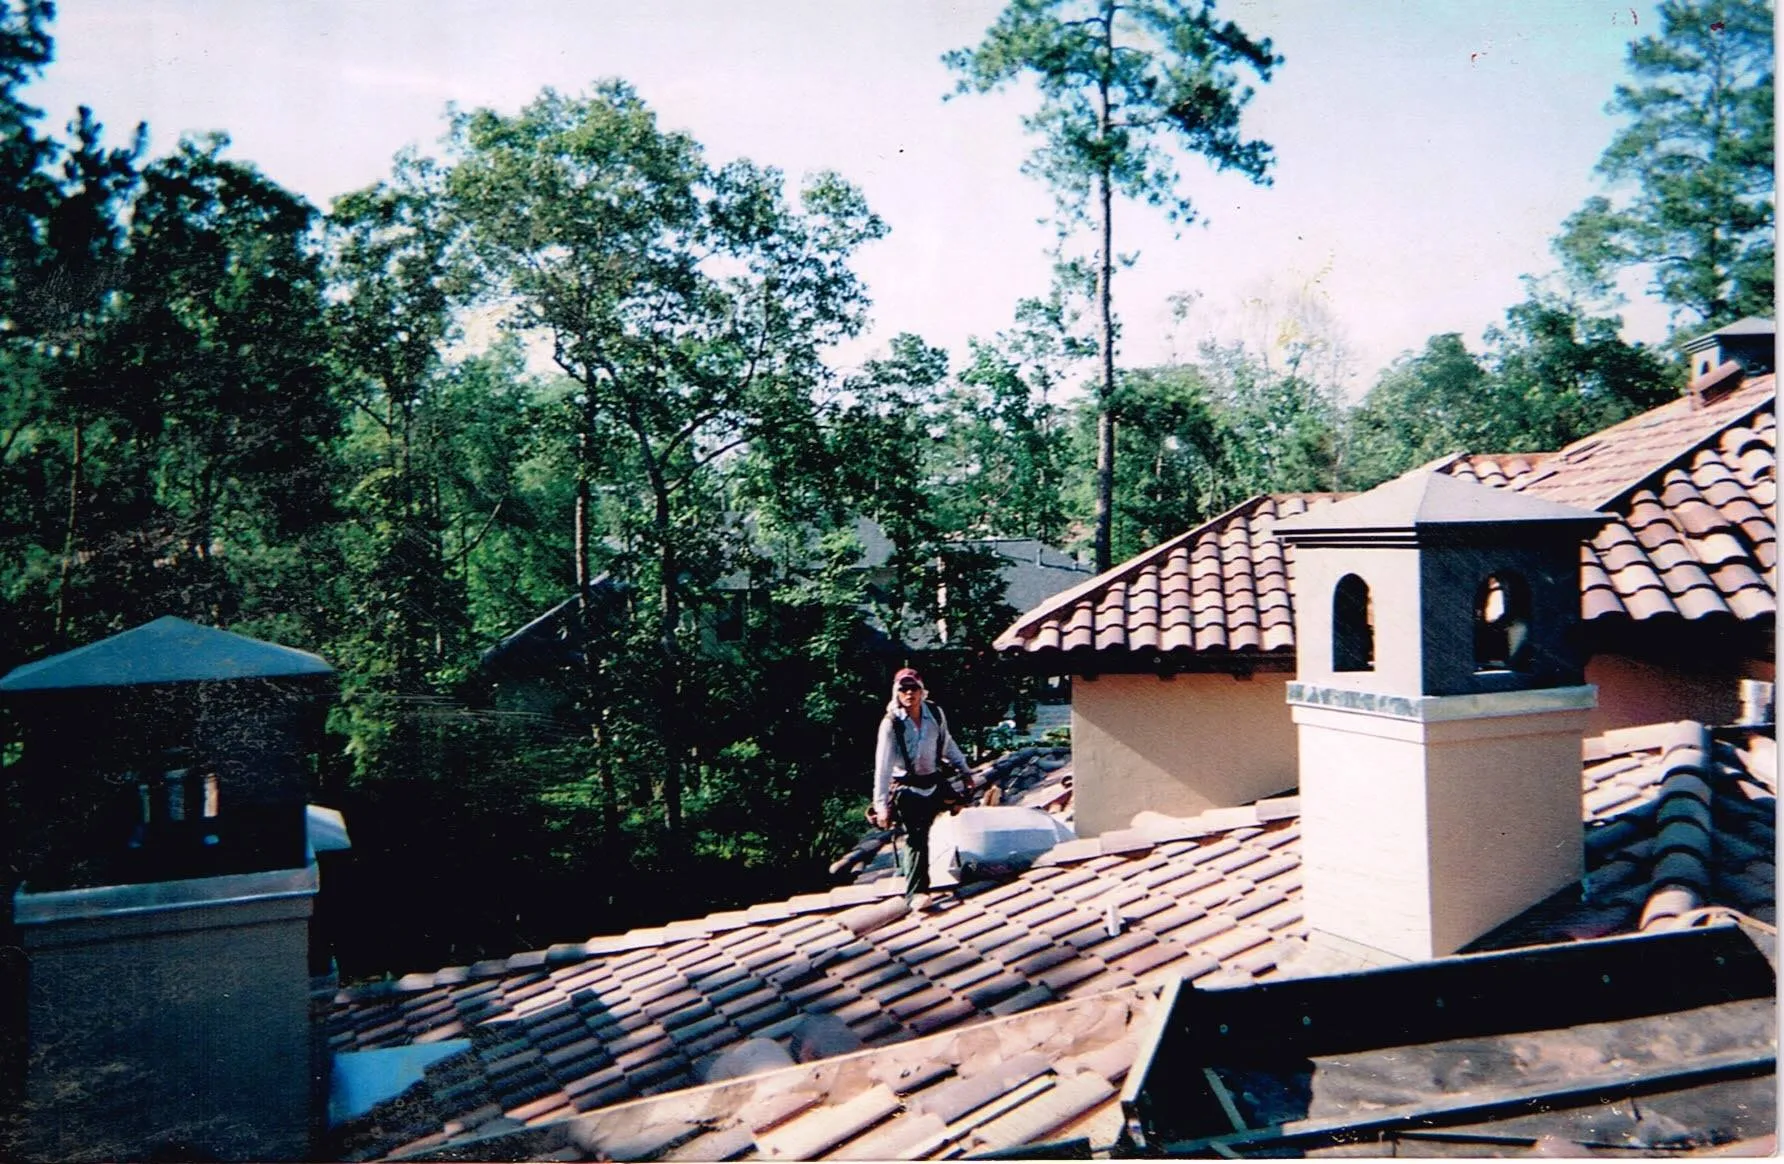 Roofing Installation for NPR Roofers in Nashville, TN